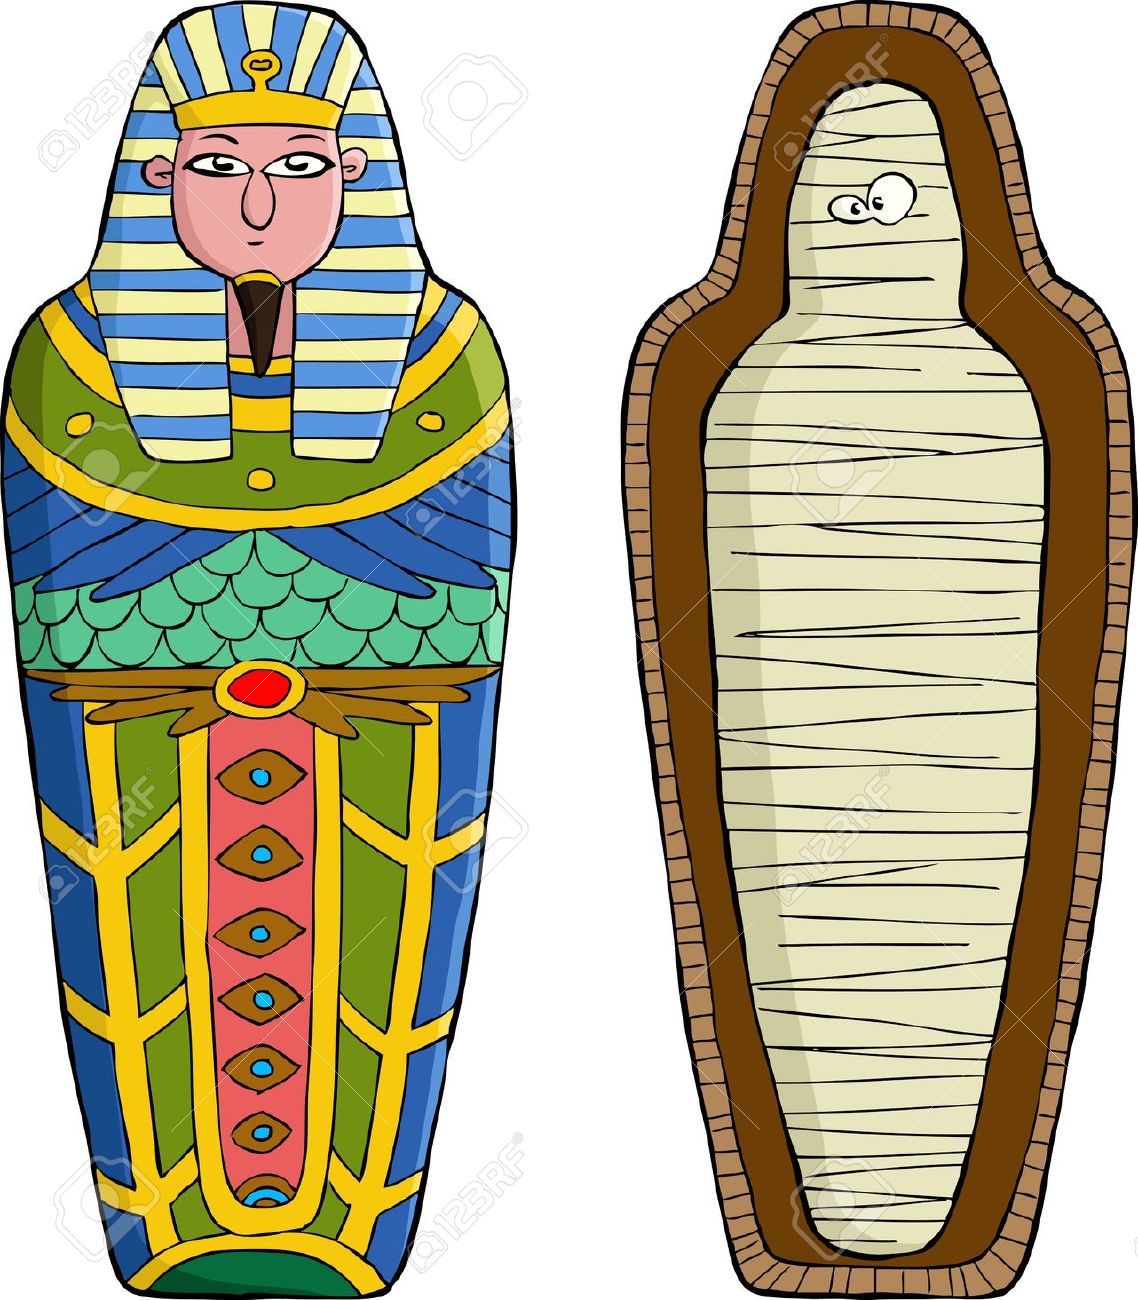 Mummy mummies clipart image